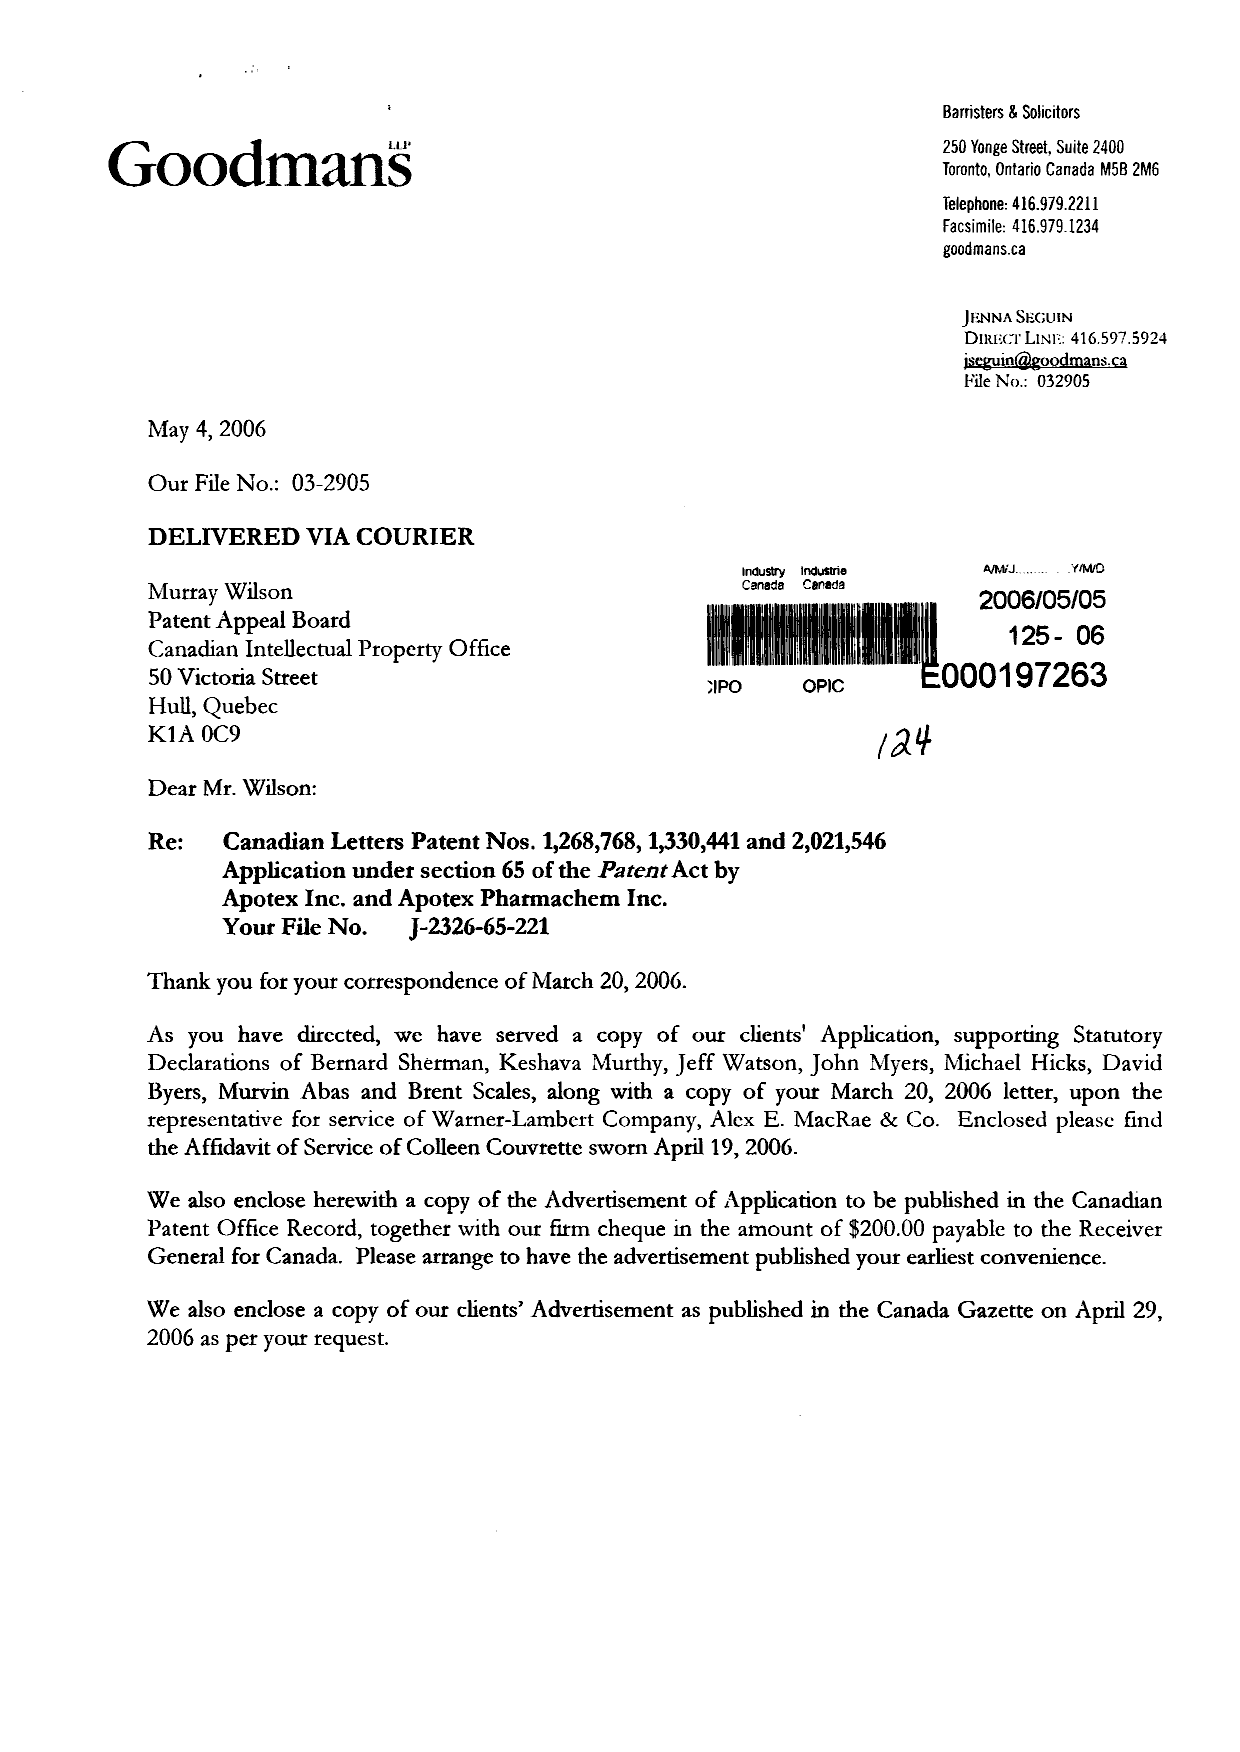 Canadian Patent Document 2021546. Correspondence 20051205. Image 1 of 17